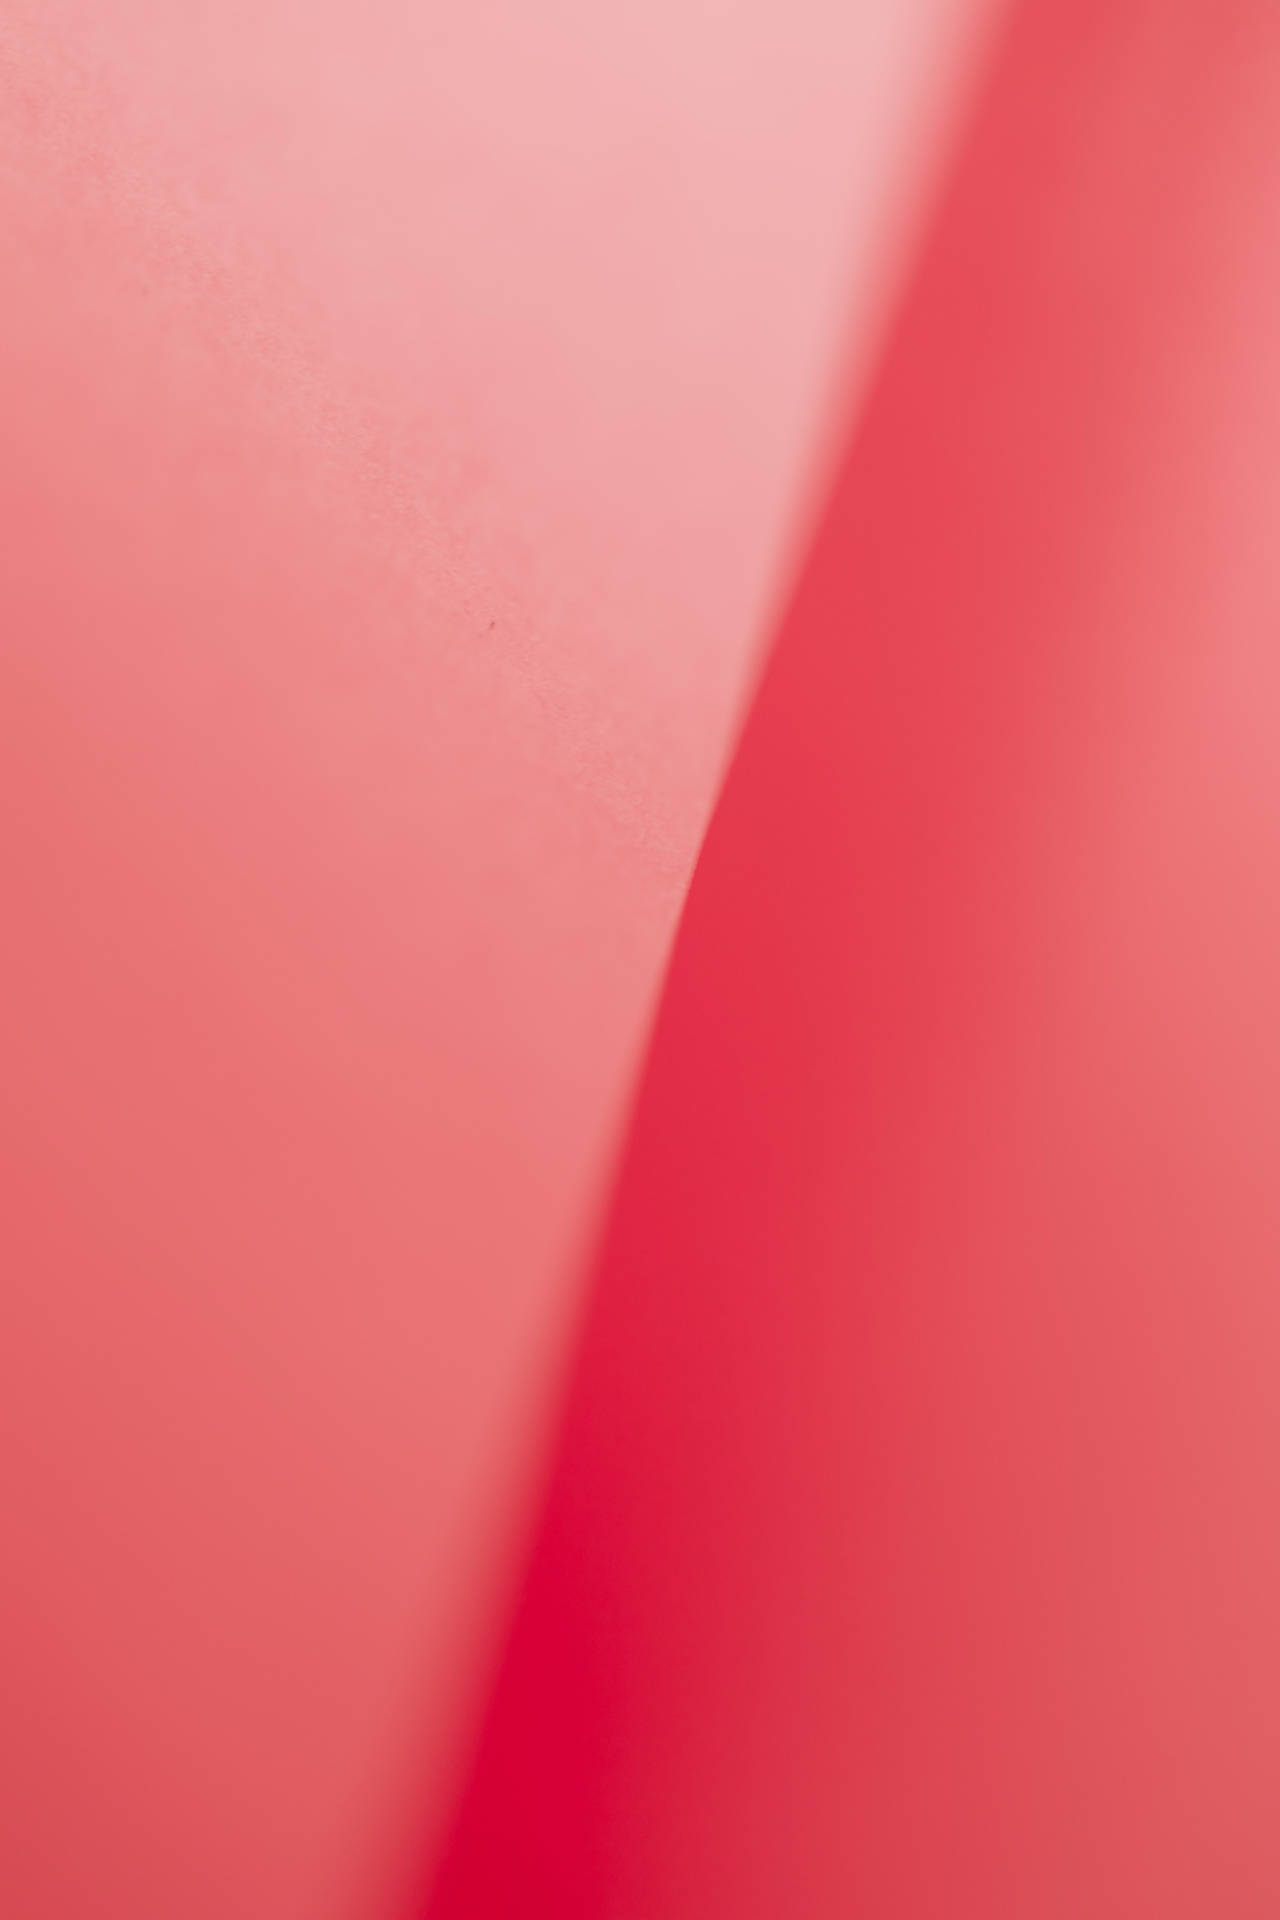 A Close Up Of A Pink Paper Wallpaper